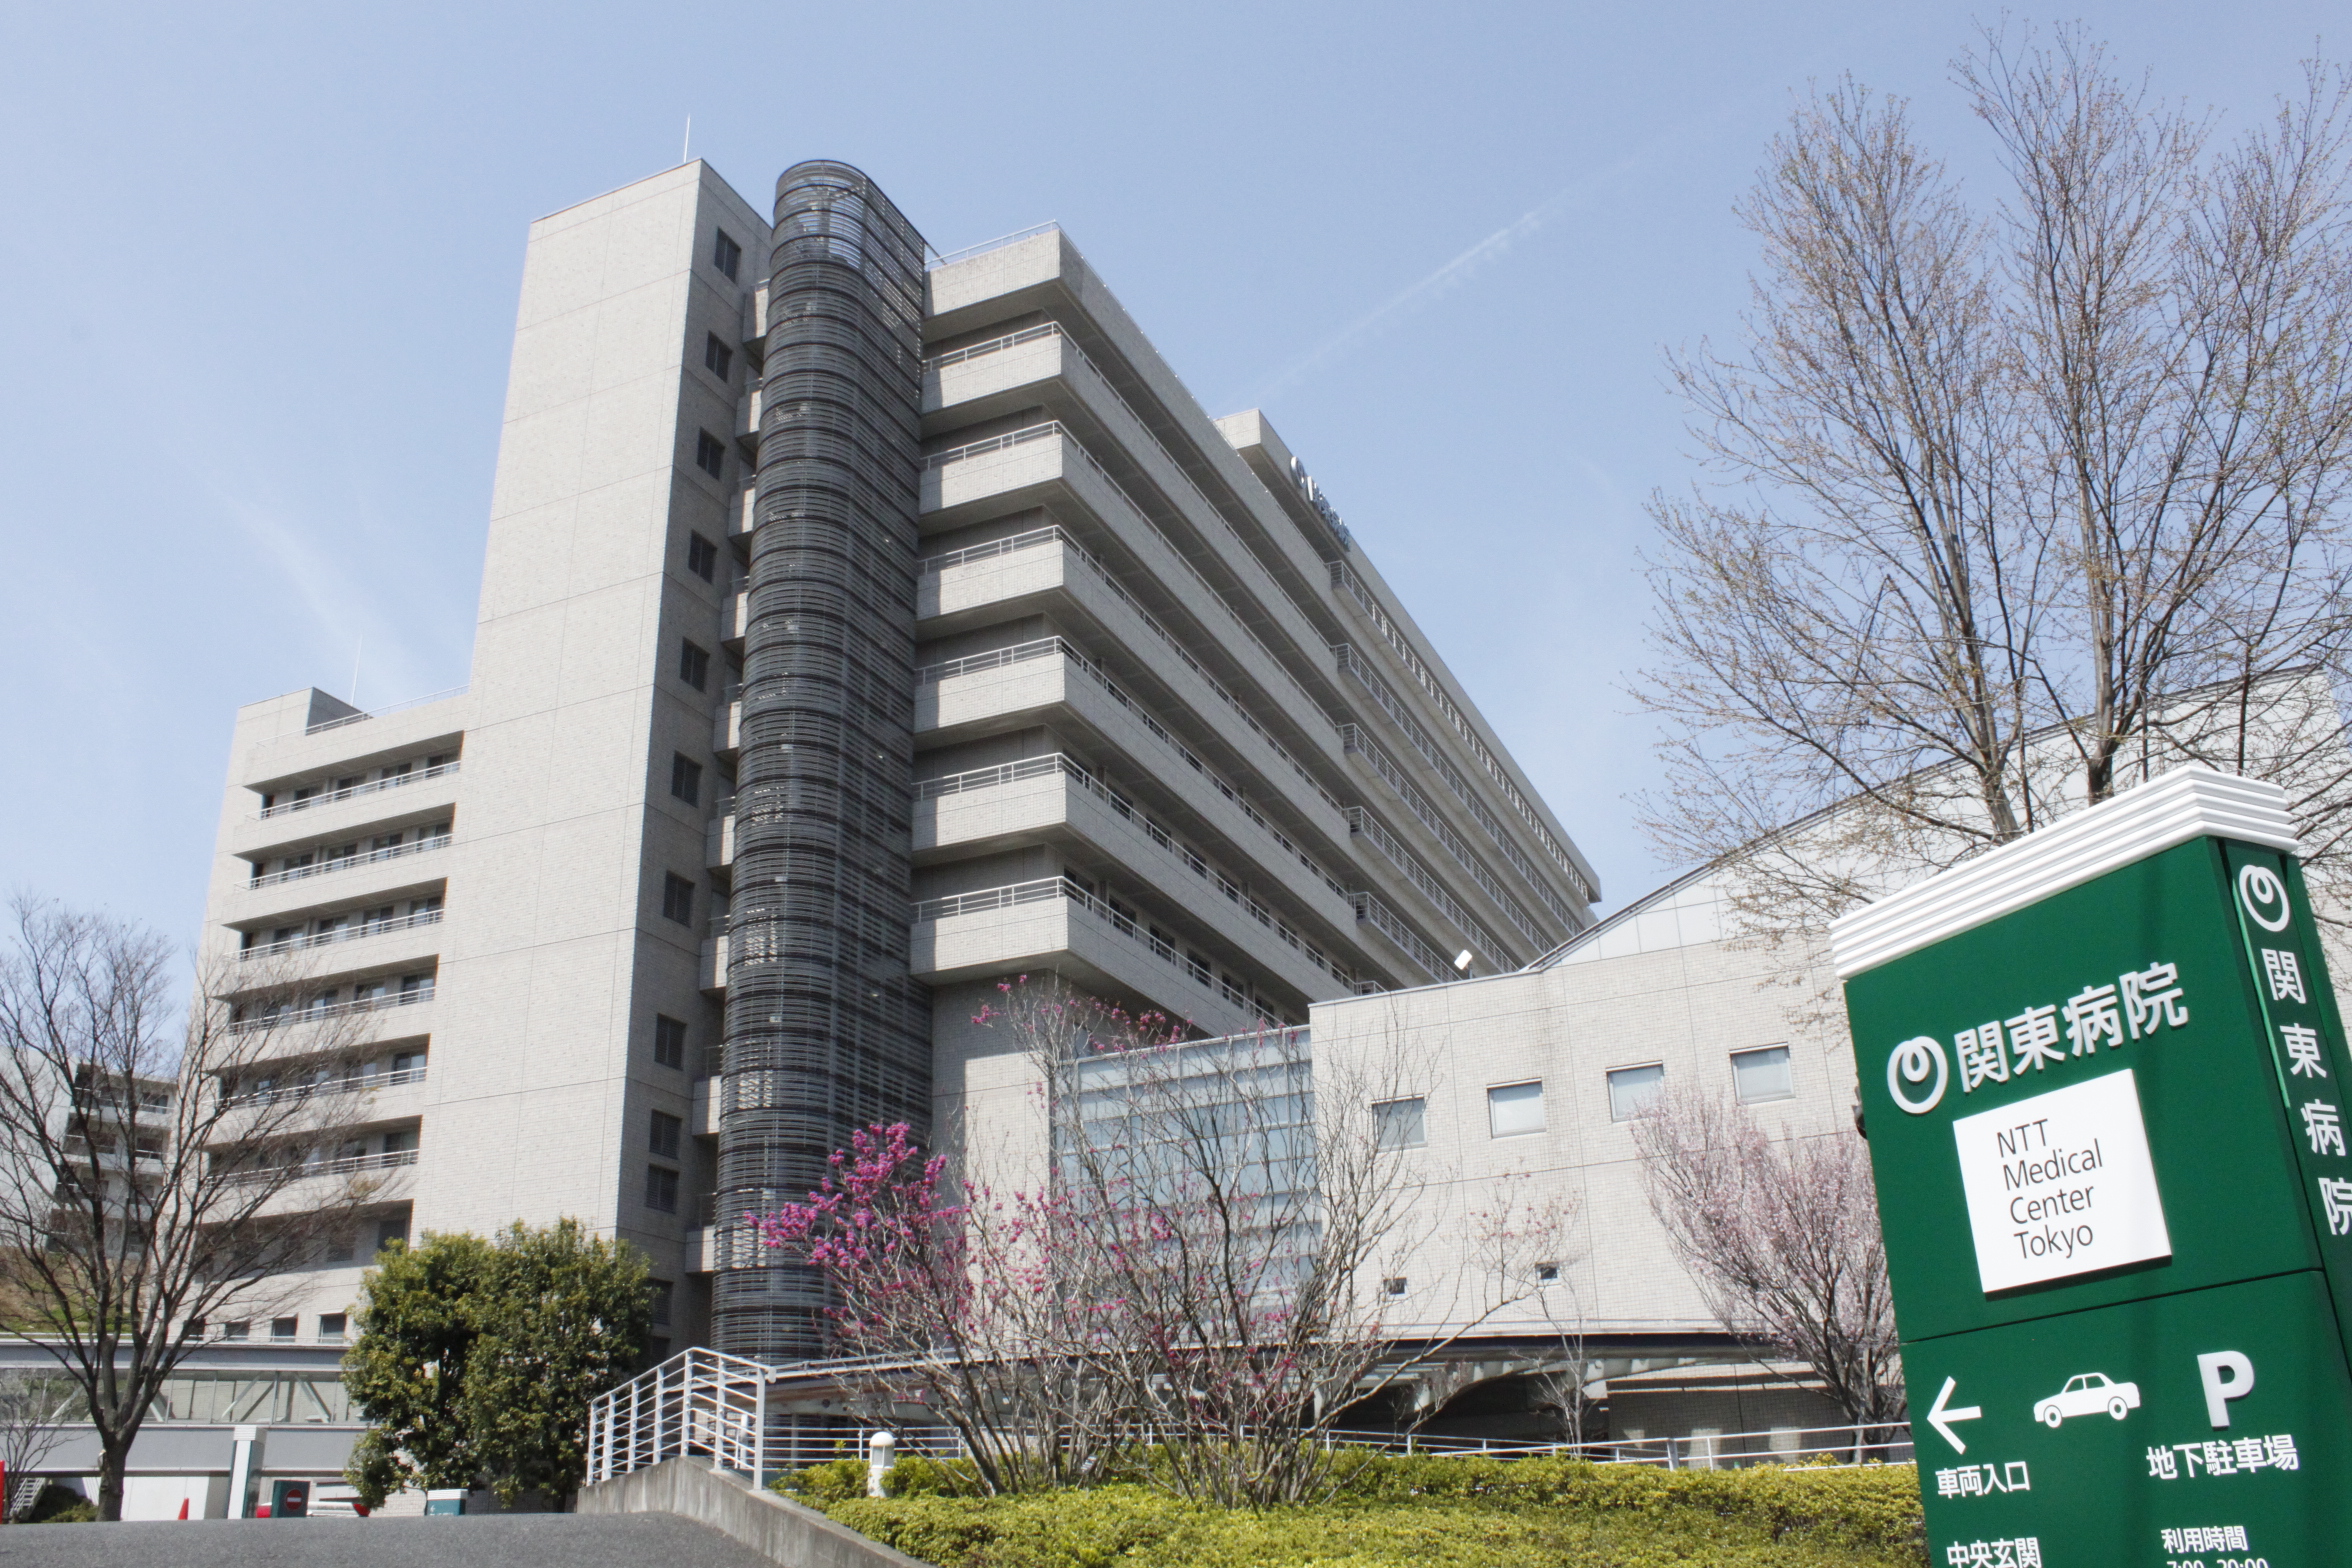 NTT東日本関東病院様の地域医療連携システム活用事例